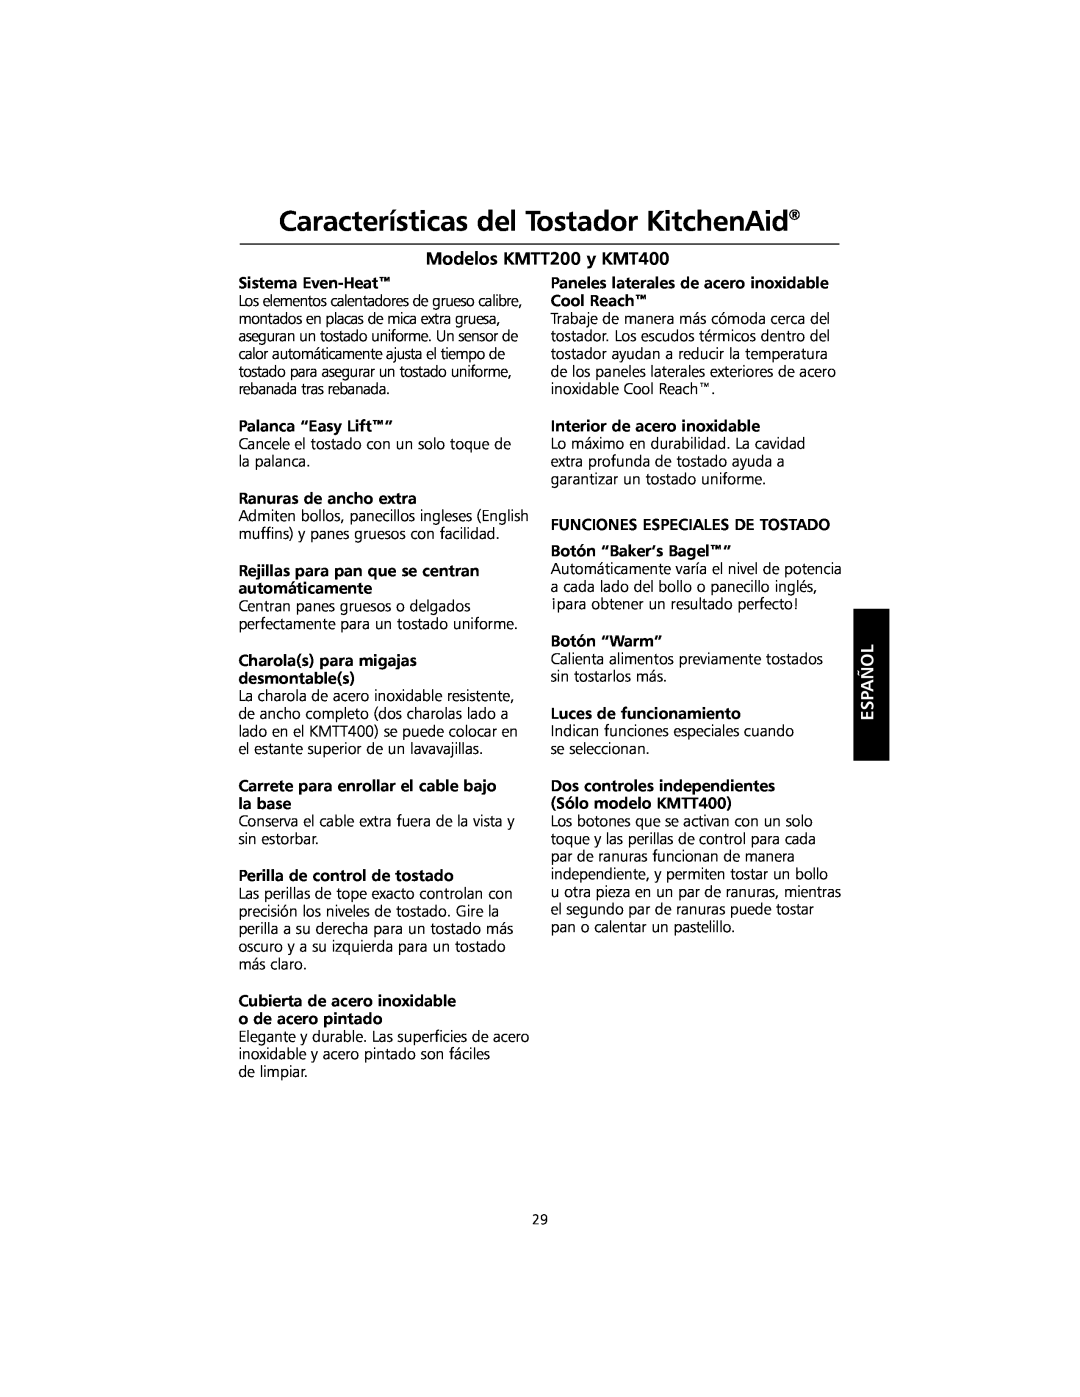 KitchenAid KMTT400 manual Características del Tostador KitchenAid, Modelos KMTT200 y KMT400, Español, Sistema Even-Heat 